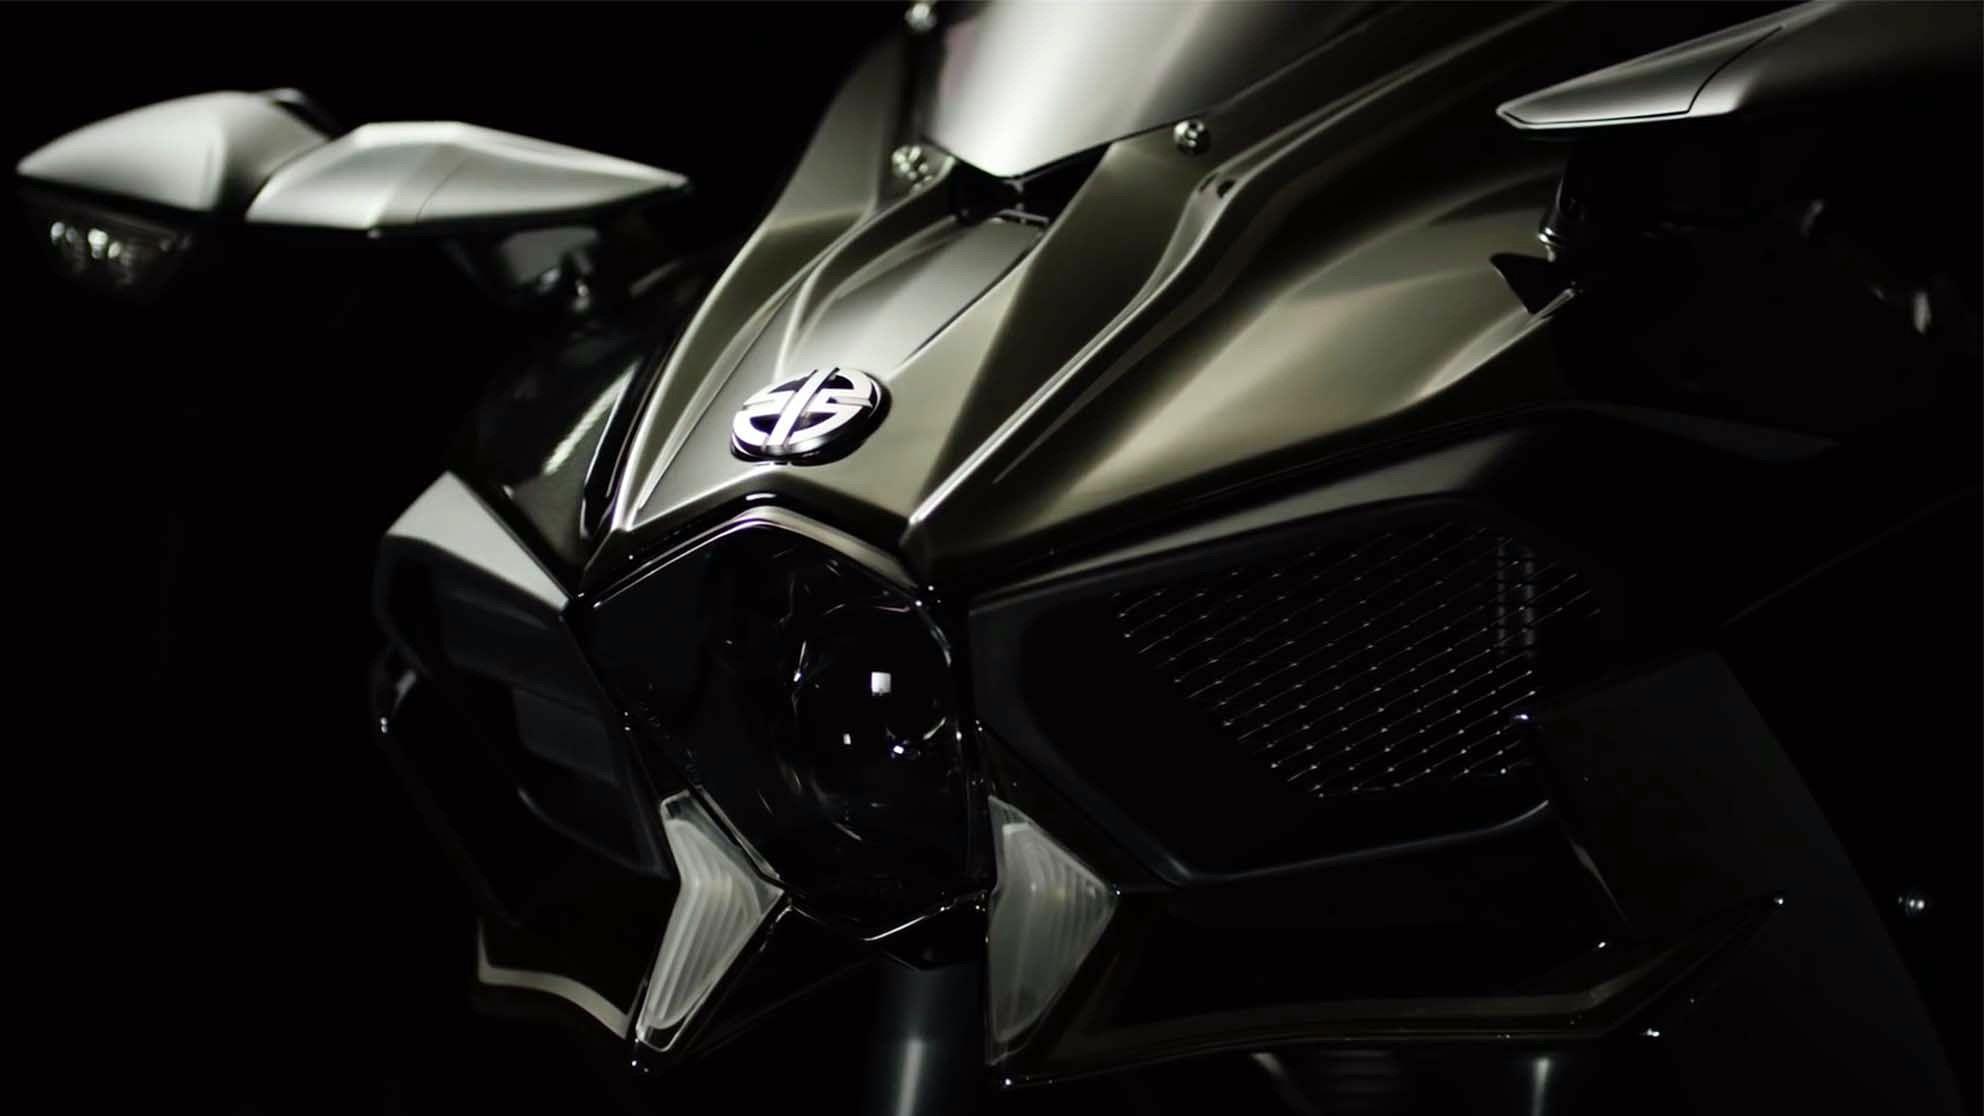 2016 Kawasaki Ninja H2 gets Spark Black colour option